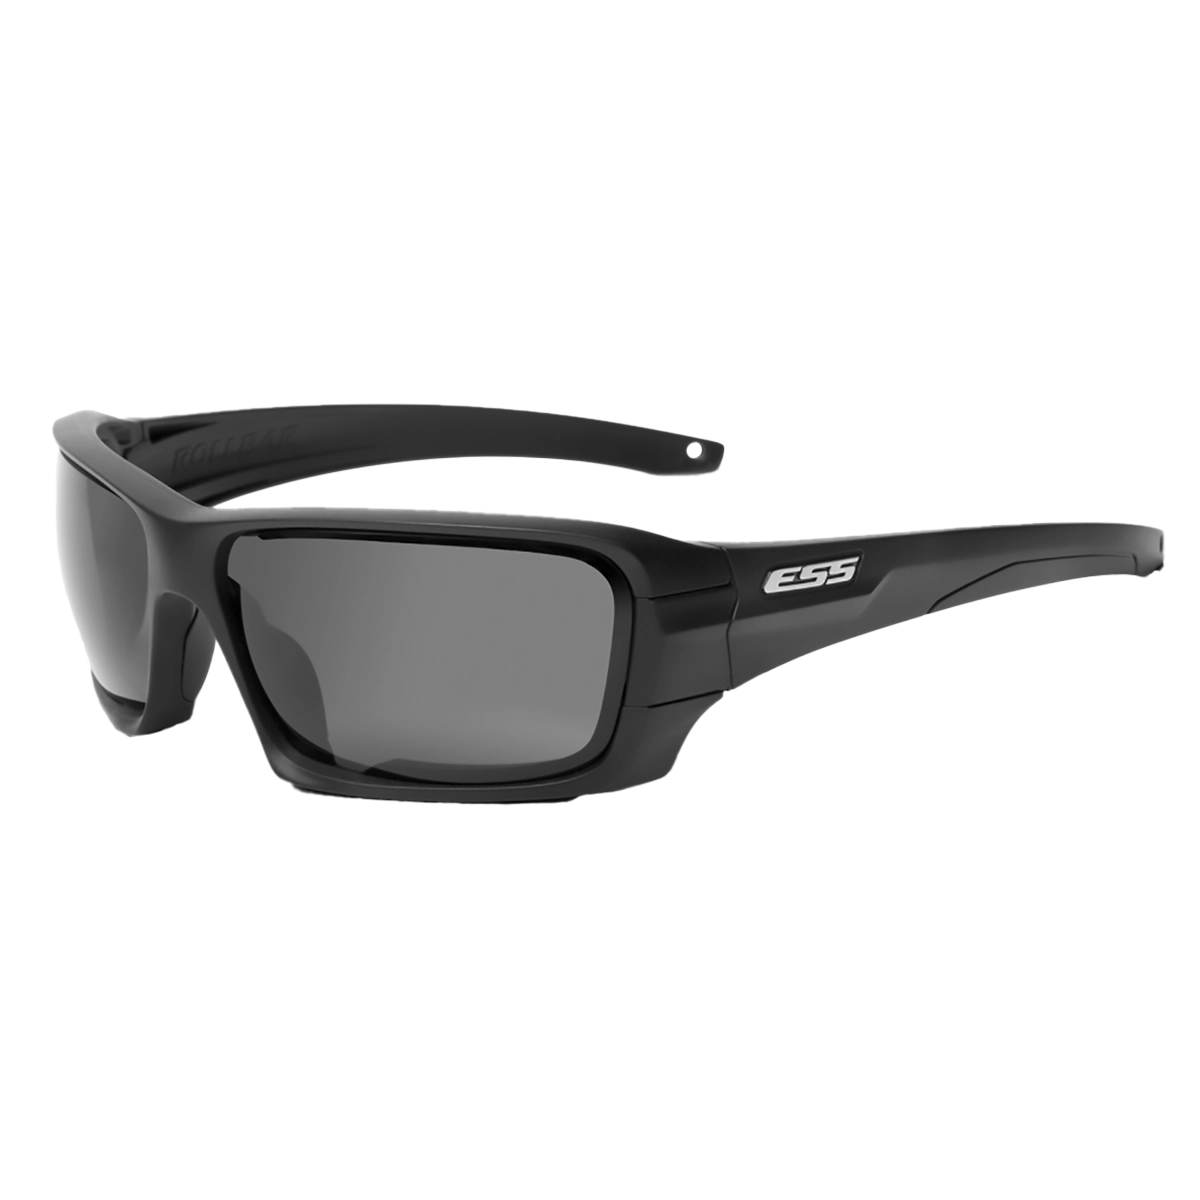 ESS Goggles Rollbar Black Frame Sunglasses with Silver ESS Logo